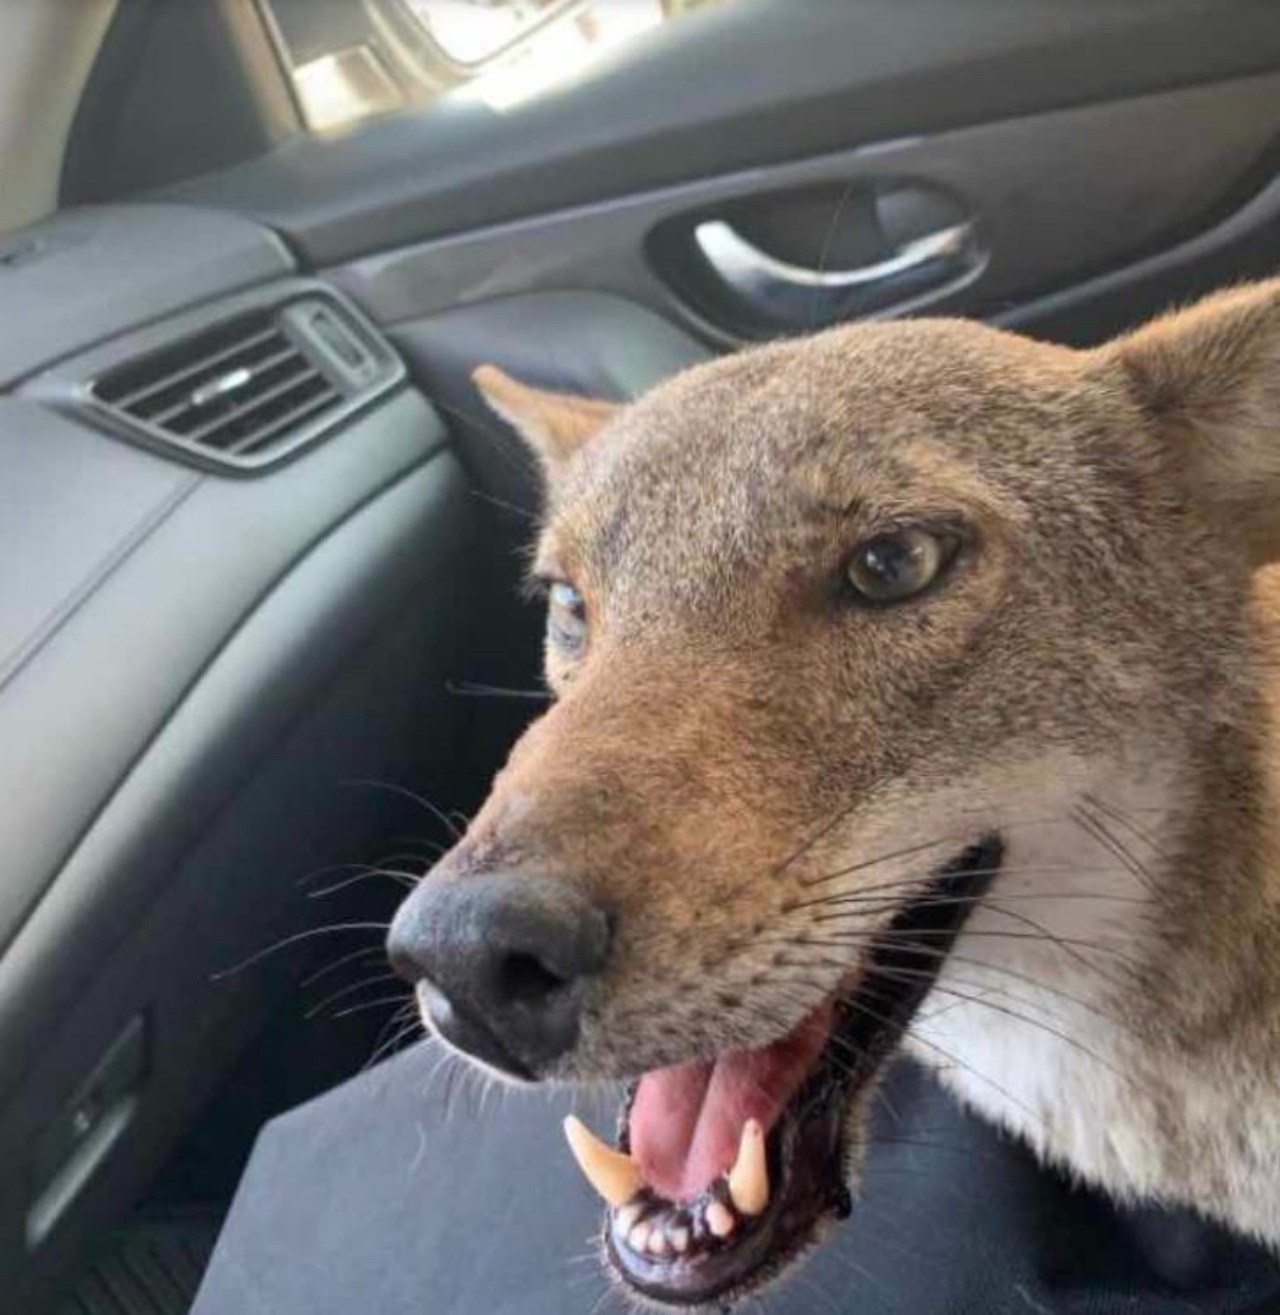 un coyote in macchina